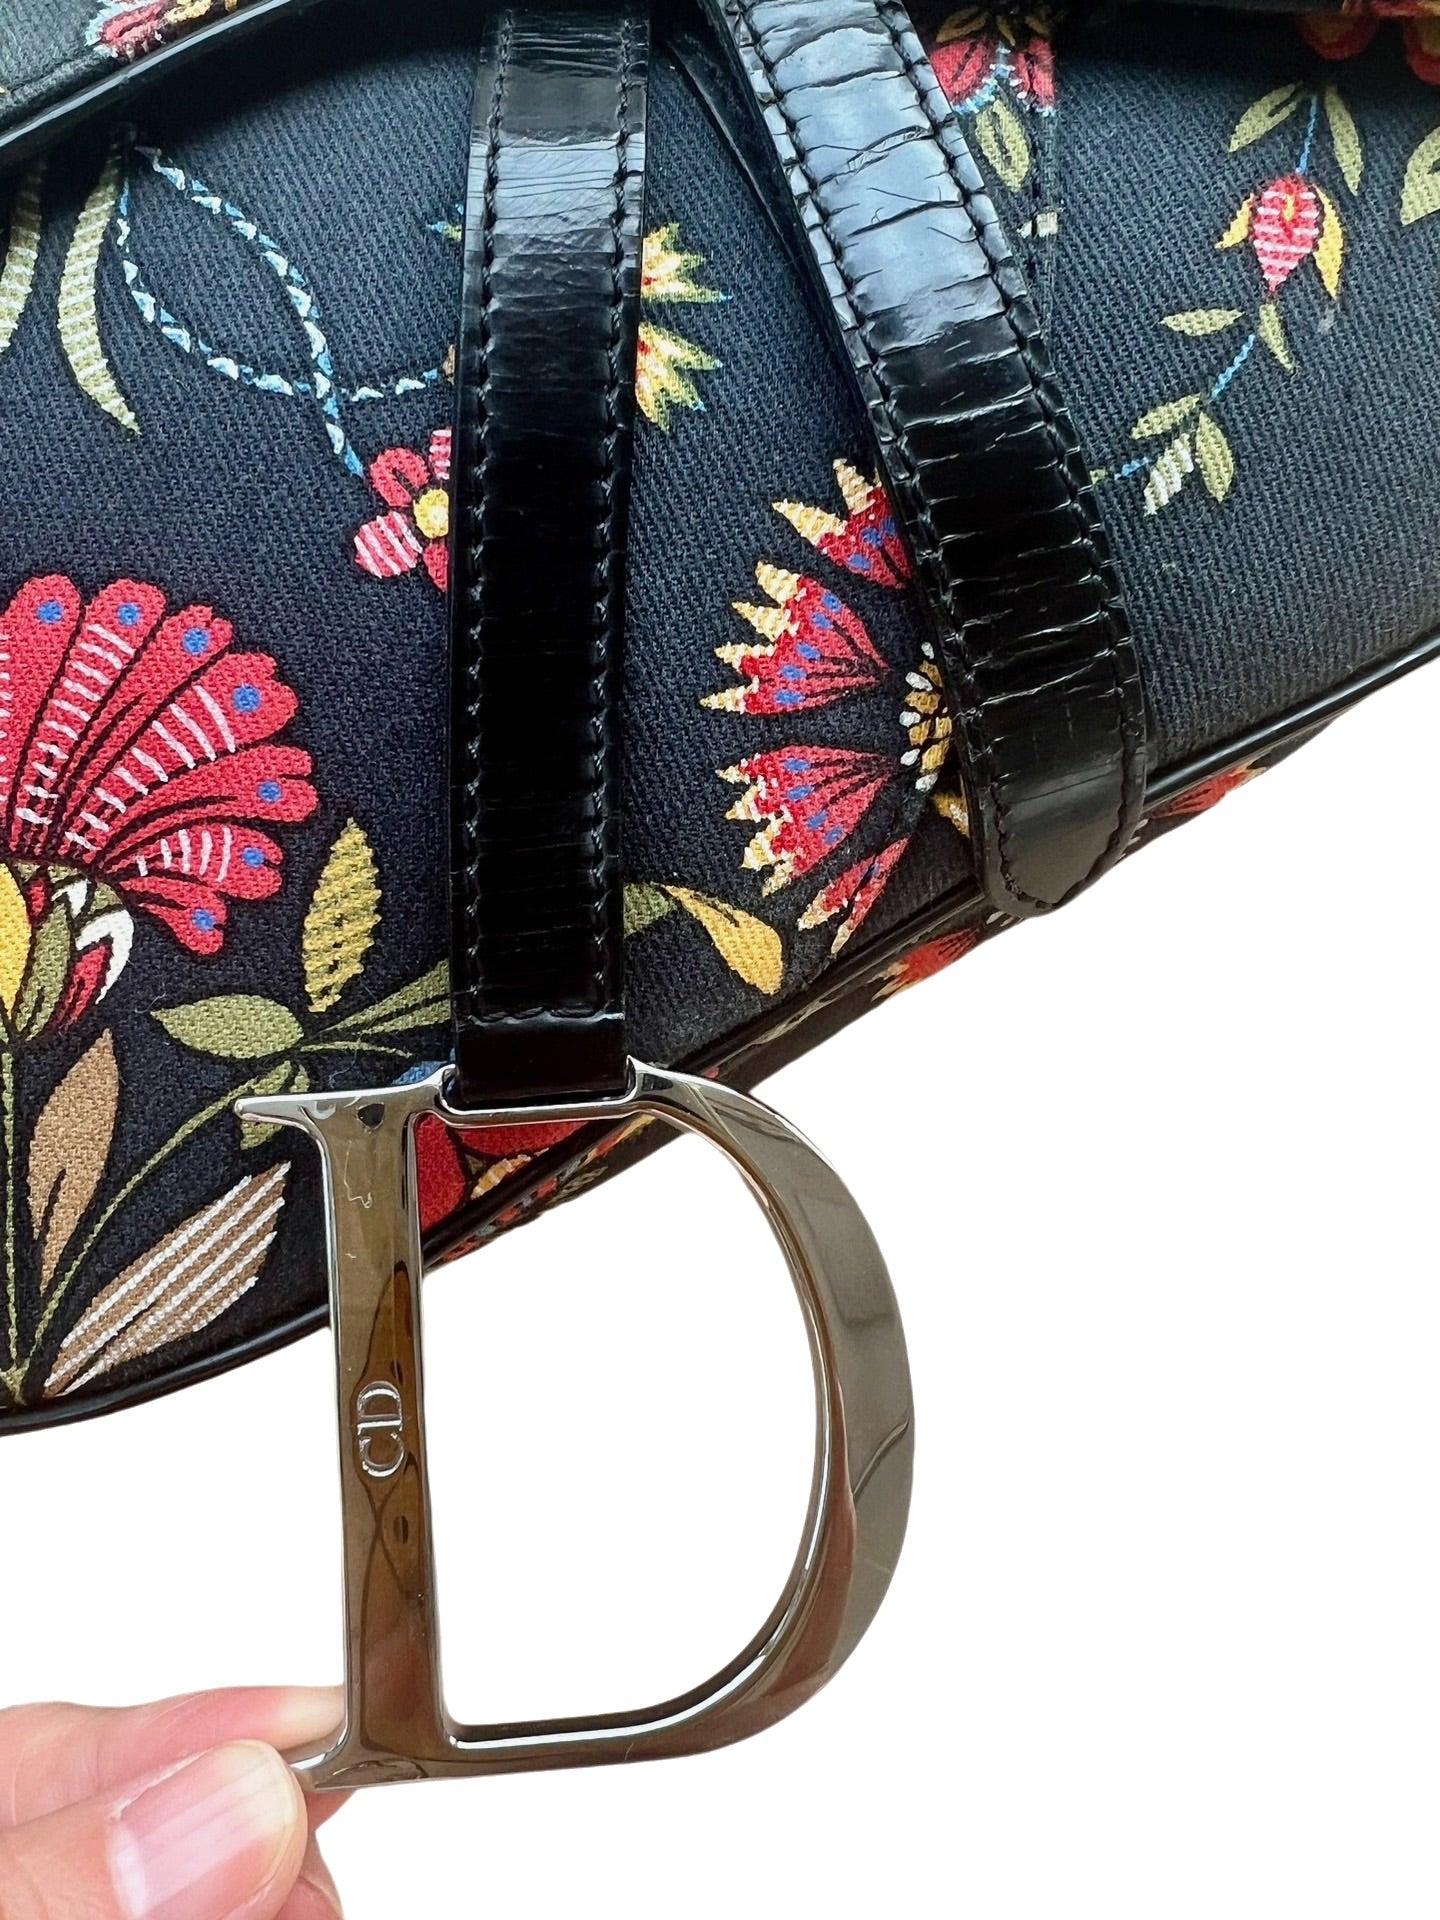 Dior Saddle Black Denim with Floral Embroidery John Galliano Design